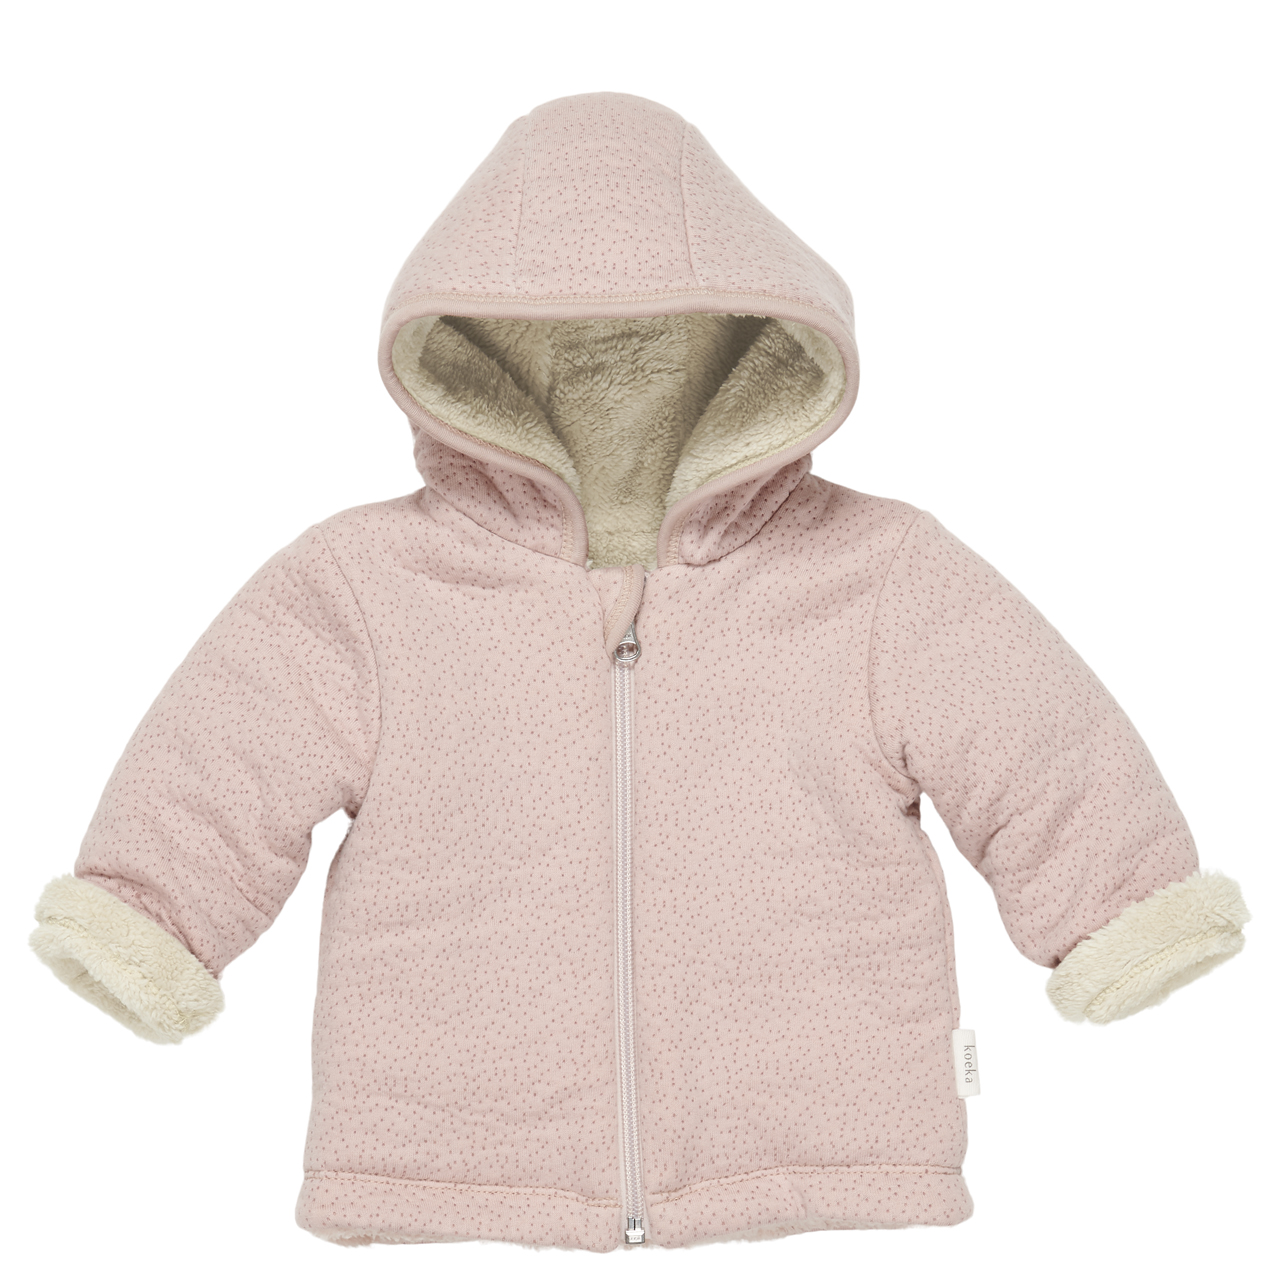 Baby jacket reversible Riga grey pink/pebble